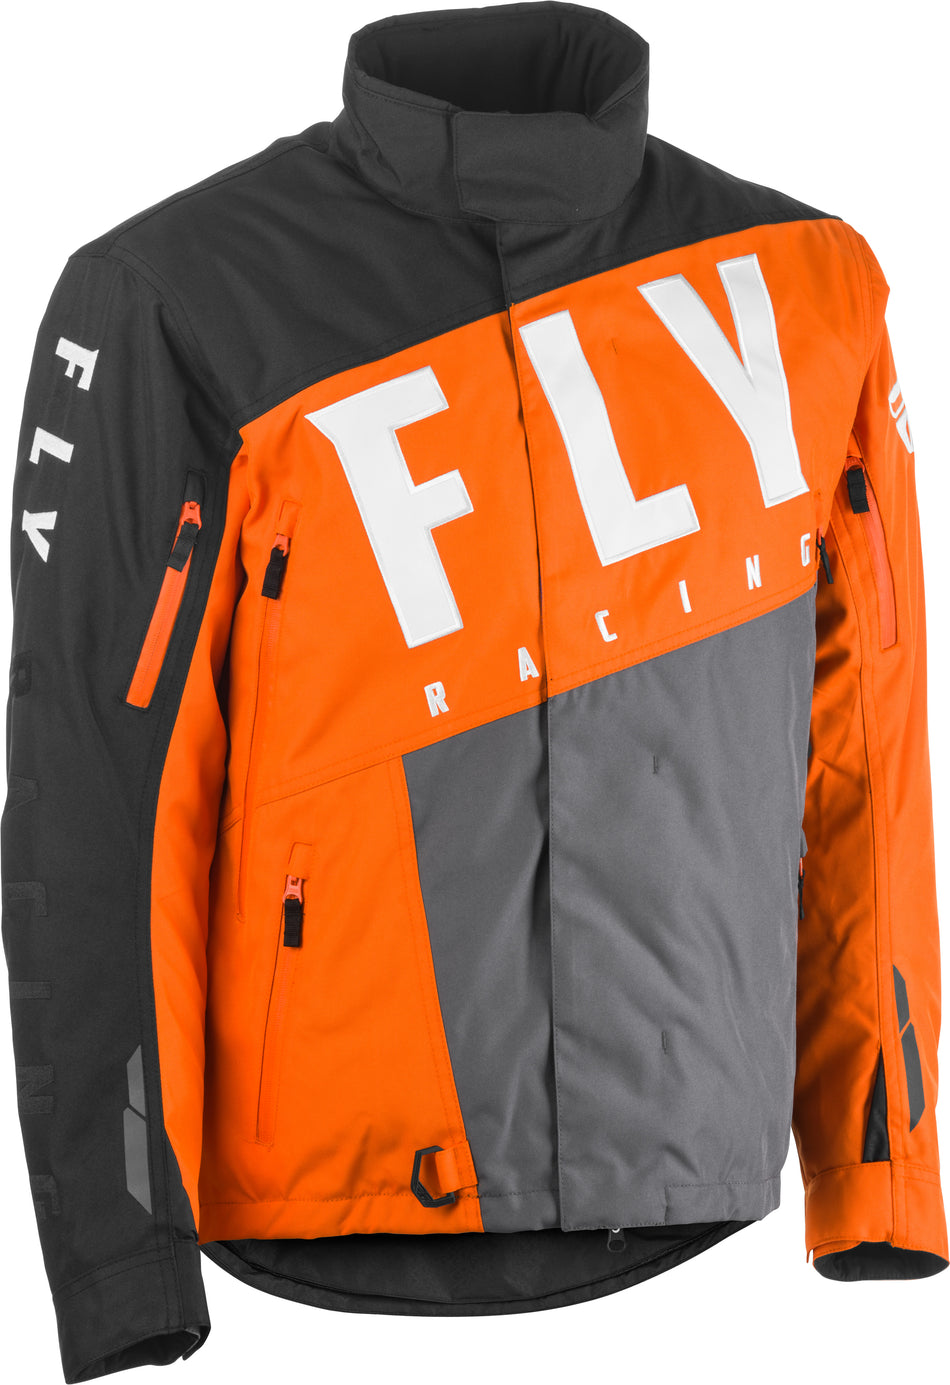 FLY RACING Fly Snx Pro Jacket Orange/Grey/Black Md 470-4113M